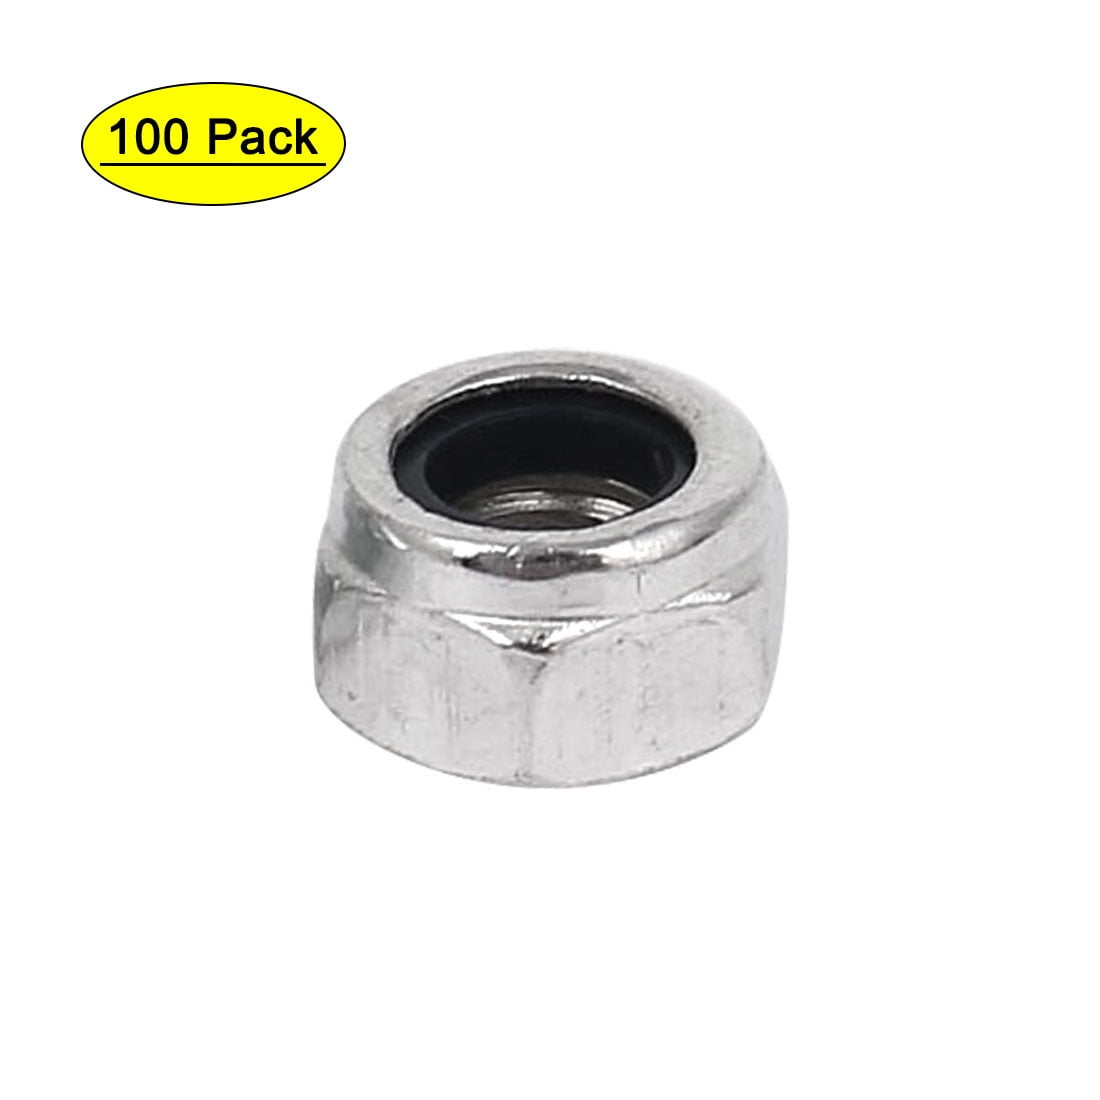 100pcs M3 x 0.5mm Stainless Steel Nylock Nylon Insert Hex Self-locking Nuts ^P 